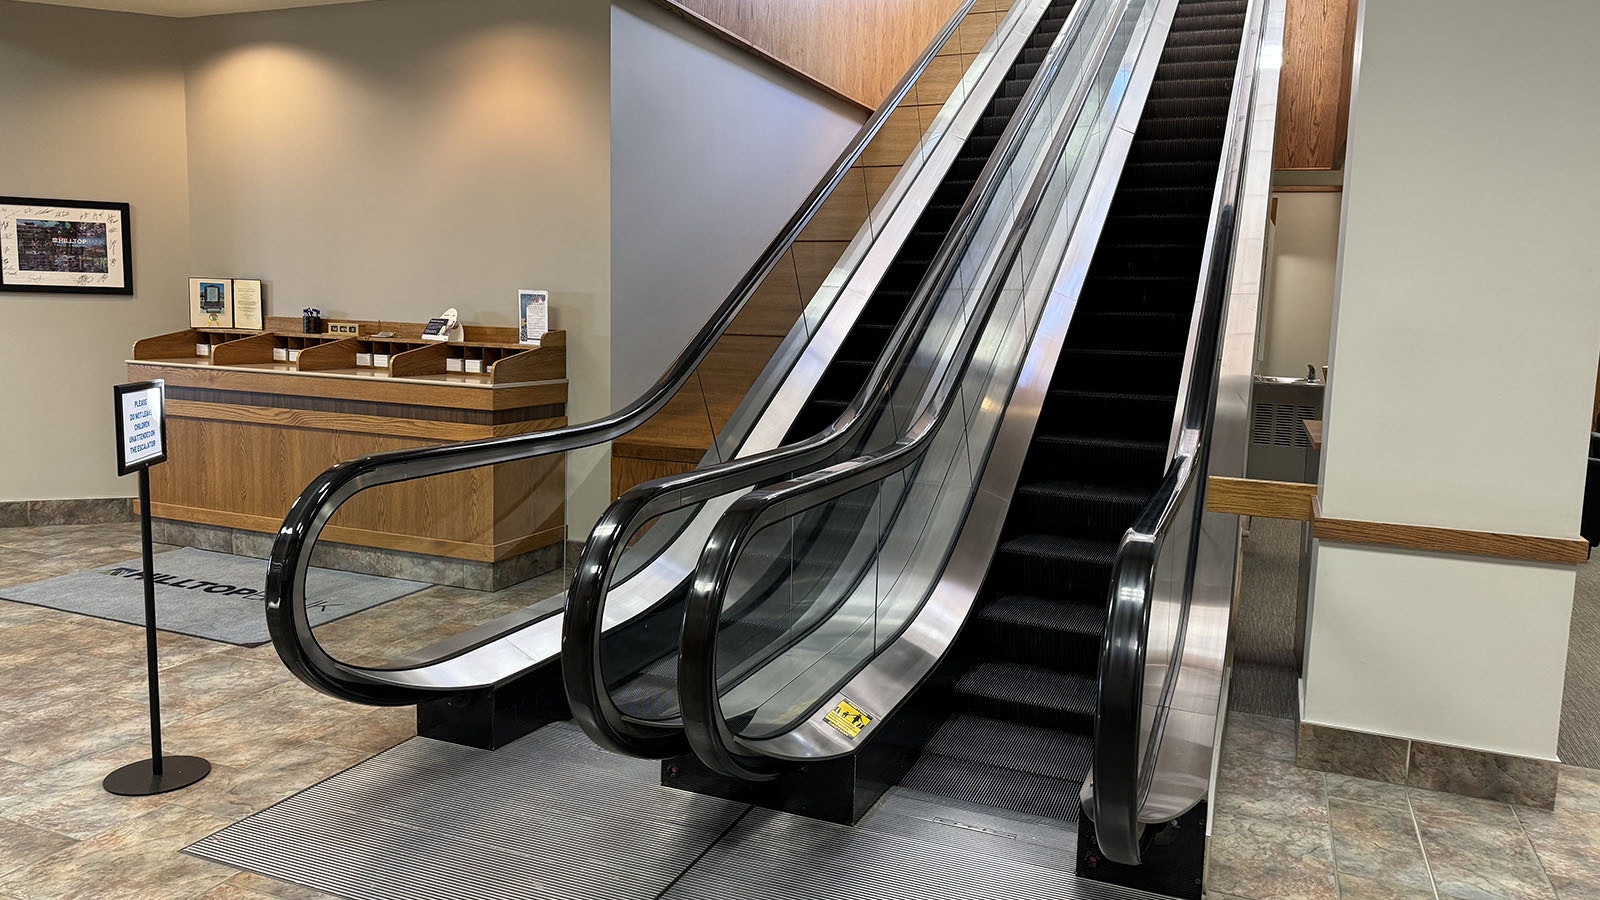 The escalators in the main branch of Hilltop Bank in Casper.